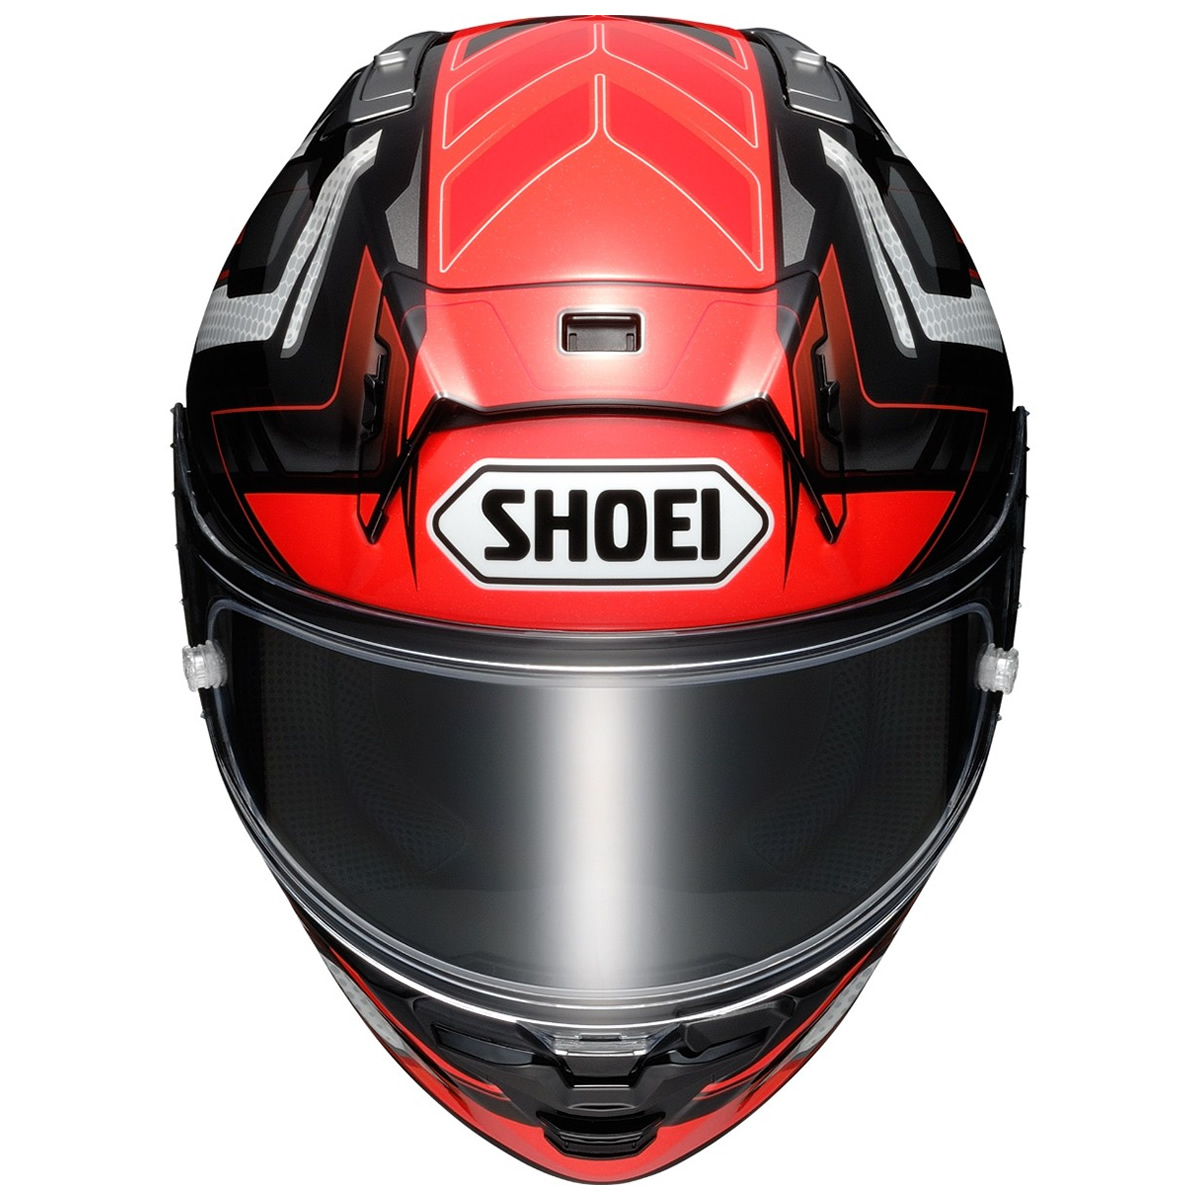 Shoei Helm X-SPR PRO Escalate, schwarz-weiß-rot kaufen